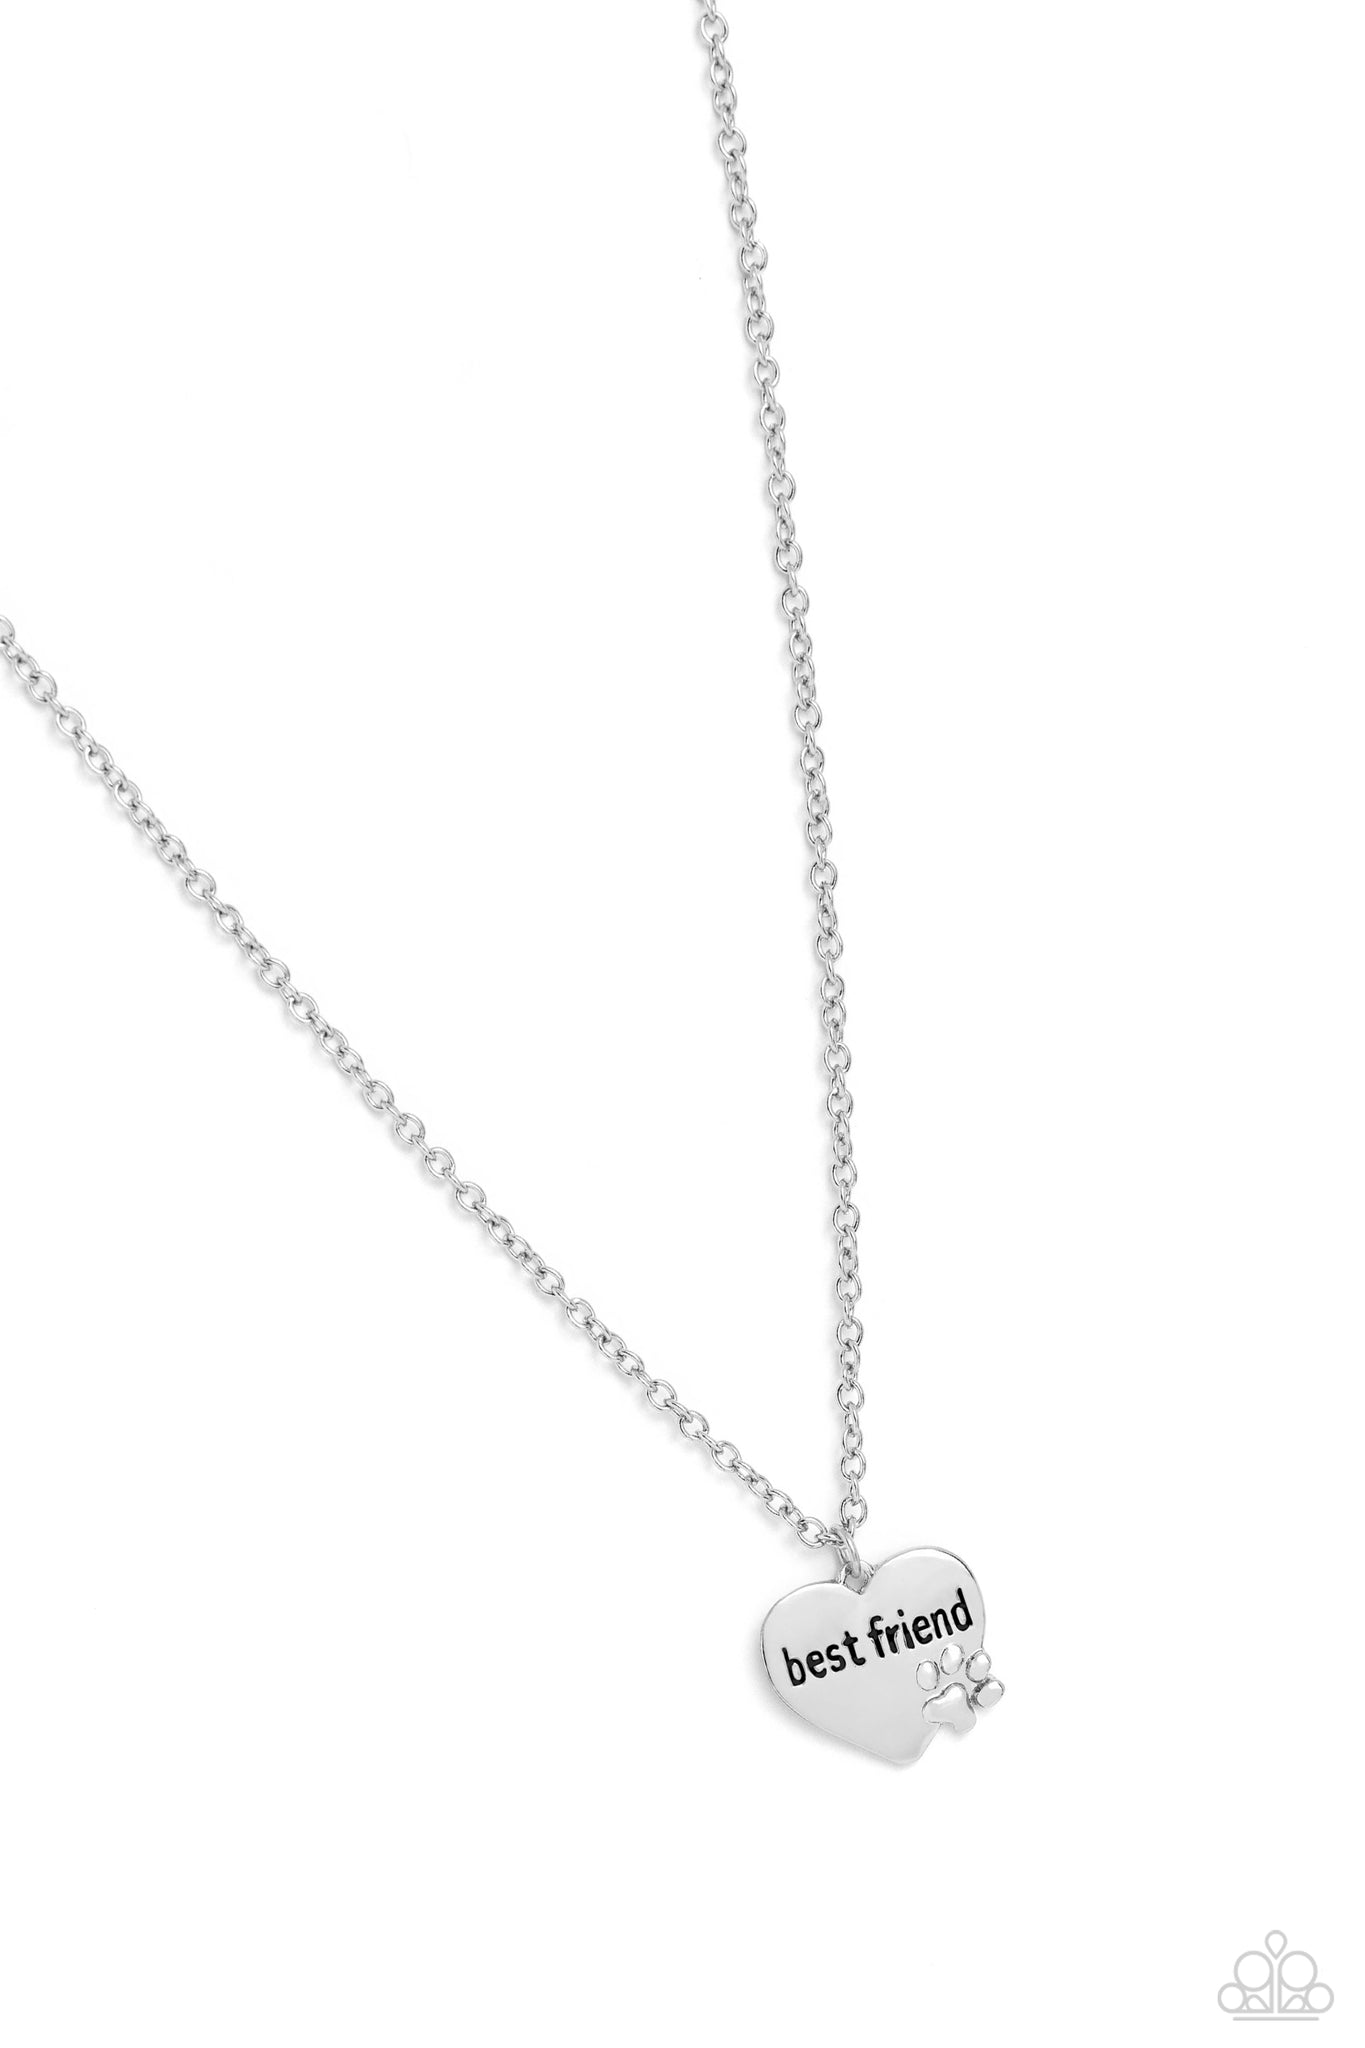 2 Piece Sterling Silver Best Friend Heart Pendant Necklace - JCPenney